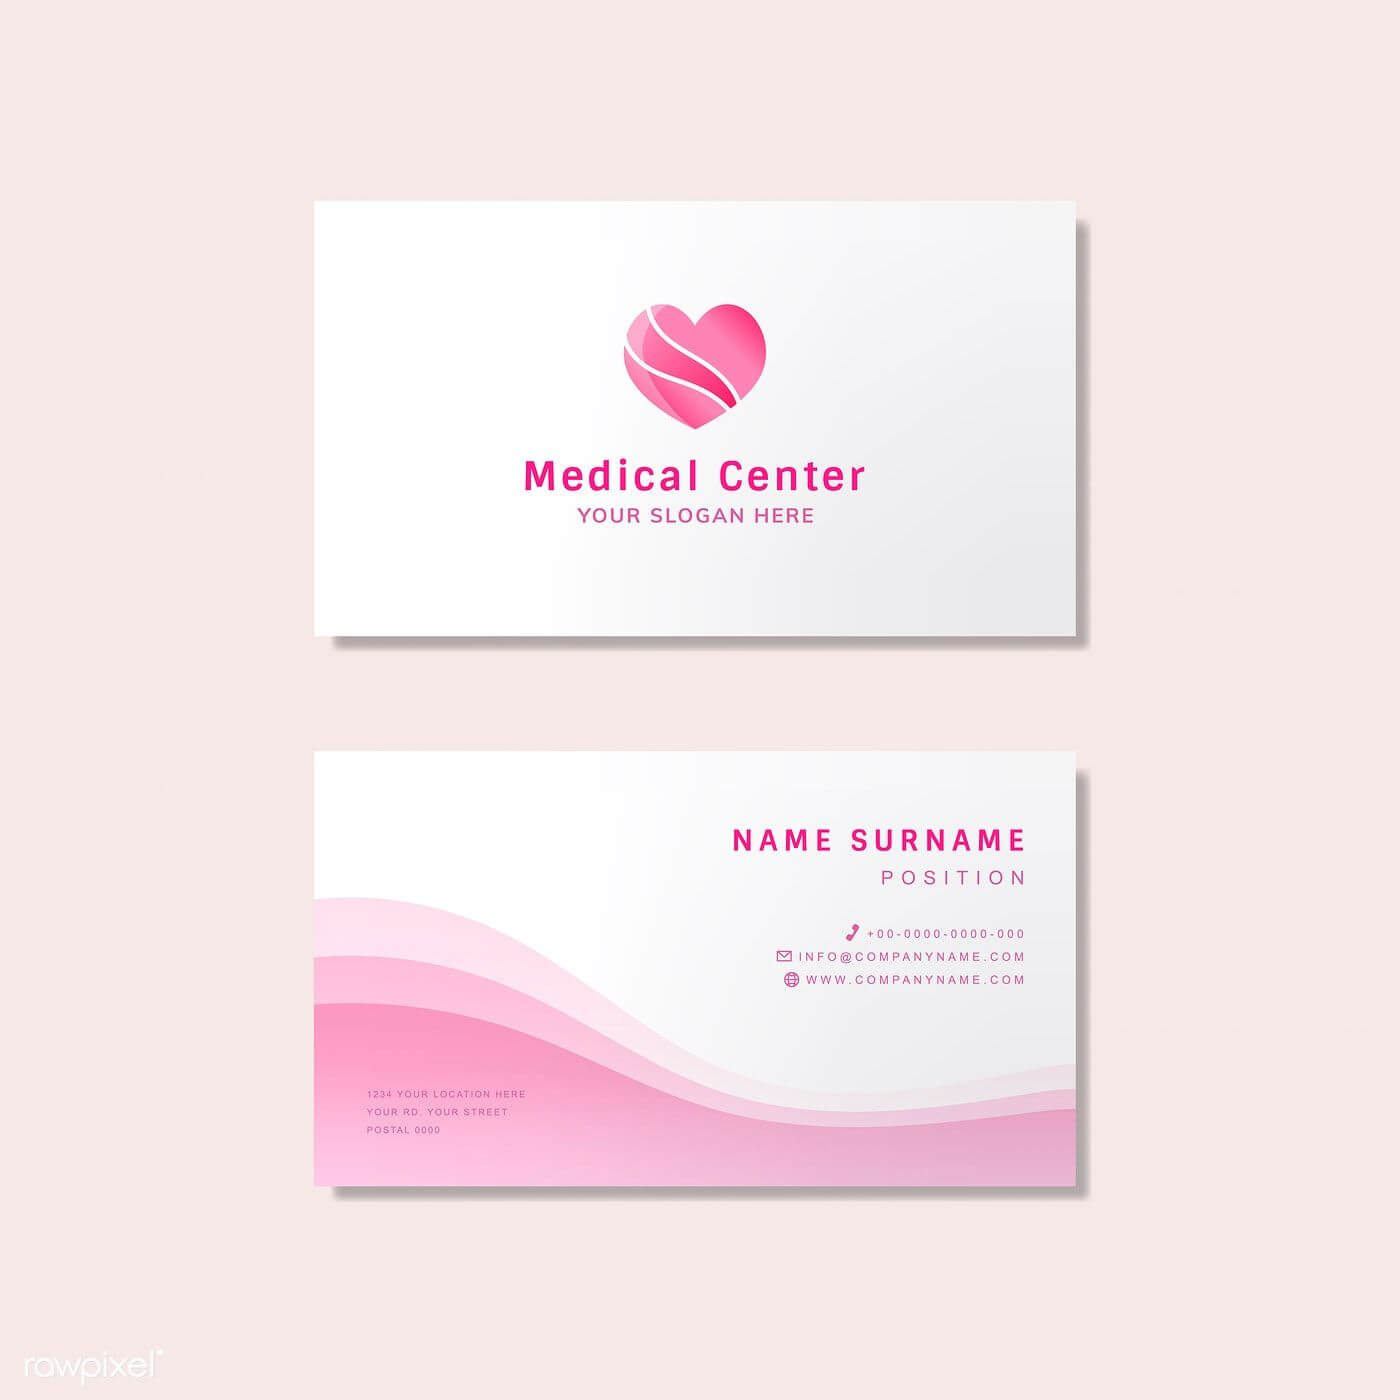 Medical Professional Business Card Design Mockup | Free Within Medical Business Cards Templates Free